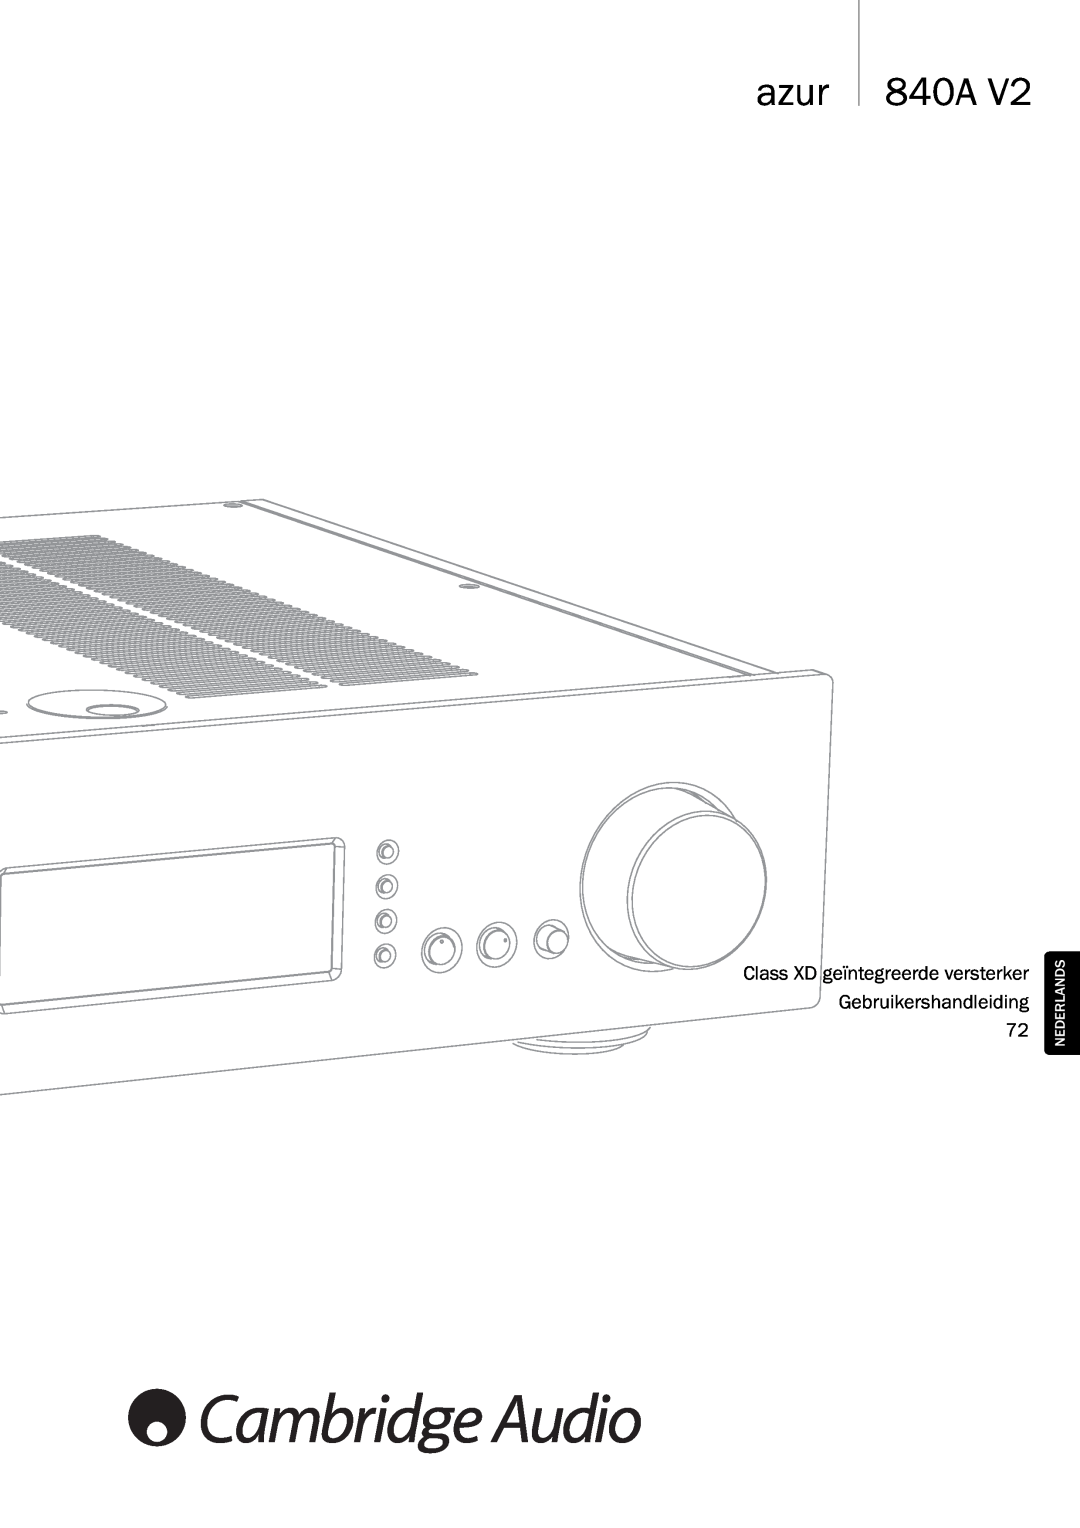 Cambridge Audio 840A V2 manual azur 840A, Class XD geïntegreerde versterker, Gebruikershandleiding, Nederlands 